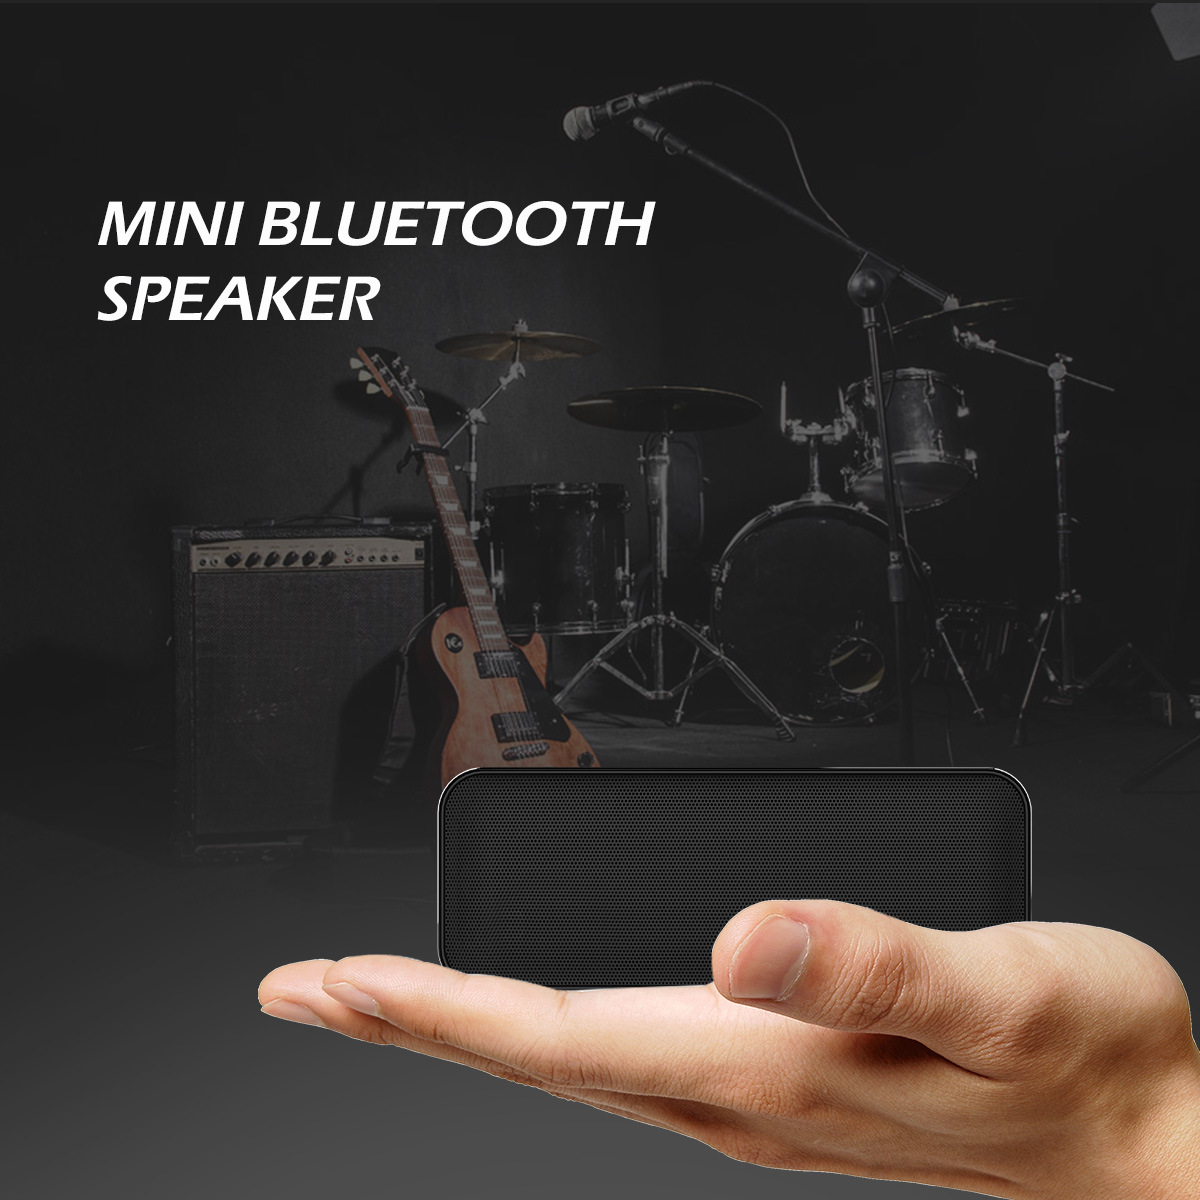 bluetooth speaker wireless speaker square dual speaker mini pocket portable metal ultra thin exquisite bluetooth speaker